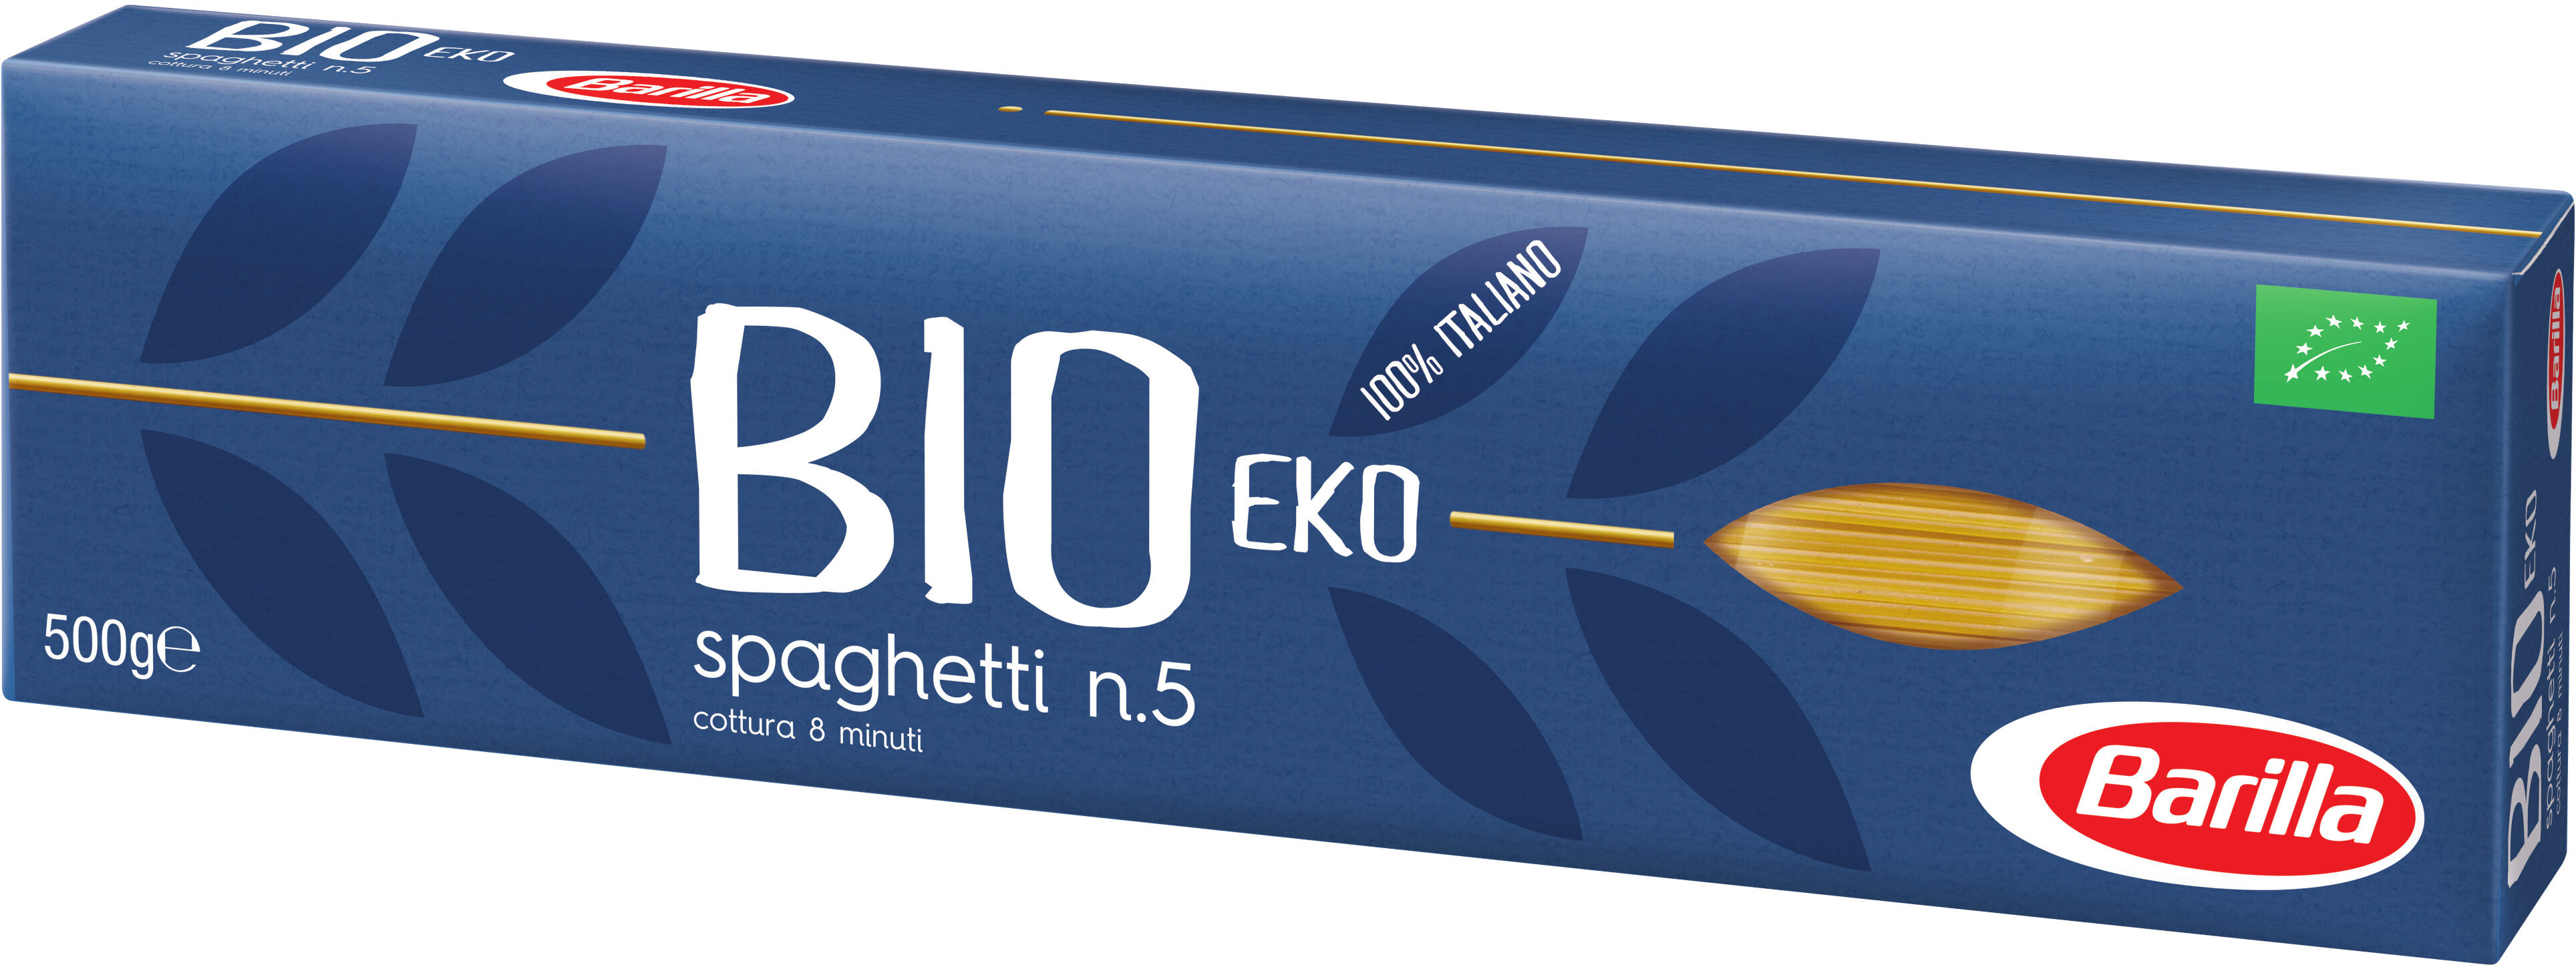 Barilla pates spaghetti bio 500g - Produkt - fr